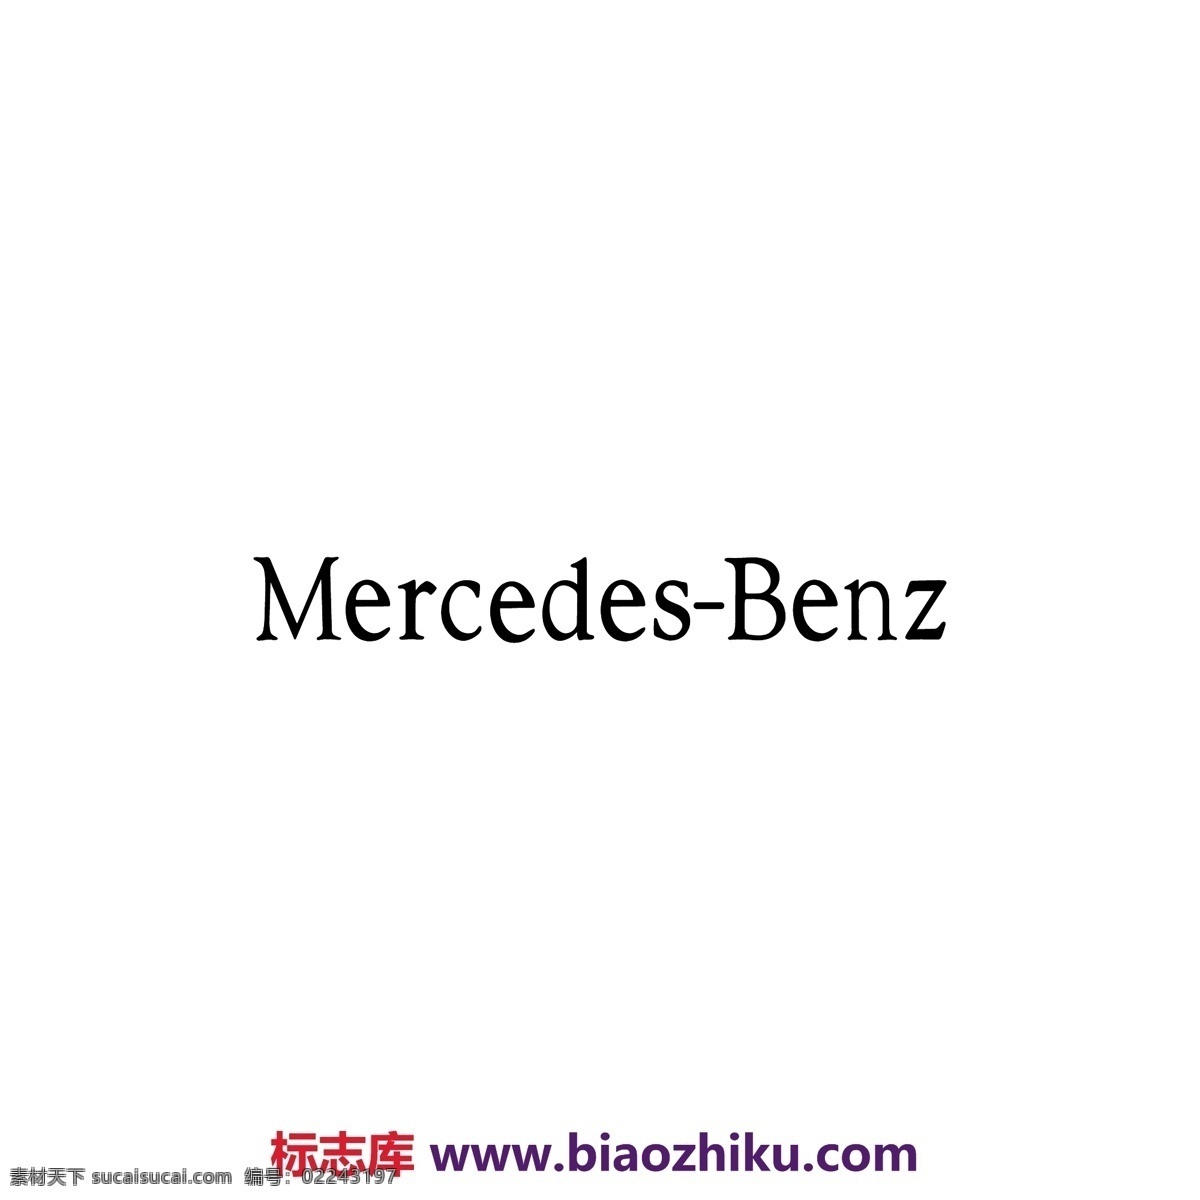 mercedesbenz logo大全 logo 设计欣赏 商业矢量 矢量下载 梅 赛 德斯 奔驰 标志设计 欣赏 网页矢量 矢量图 其他矢量图